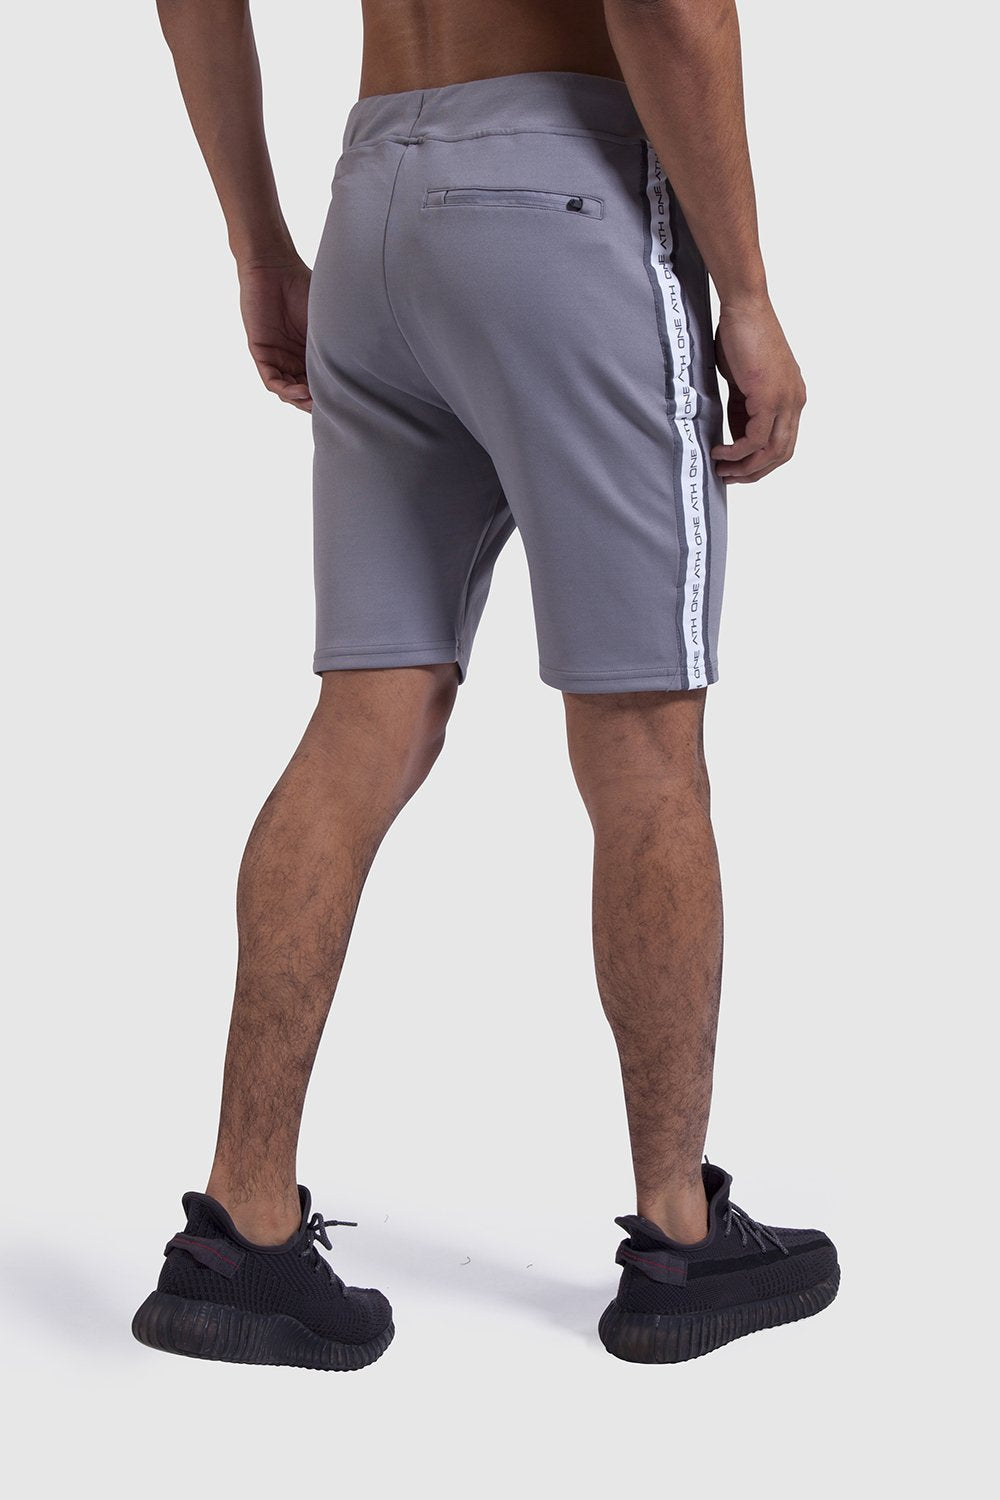 grey/white gym shorts for men